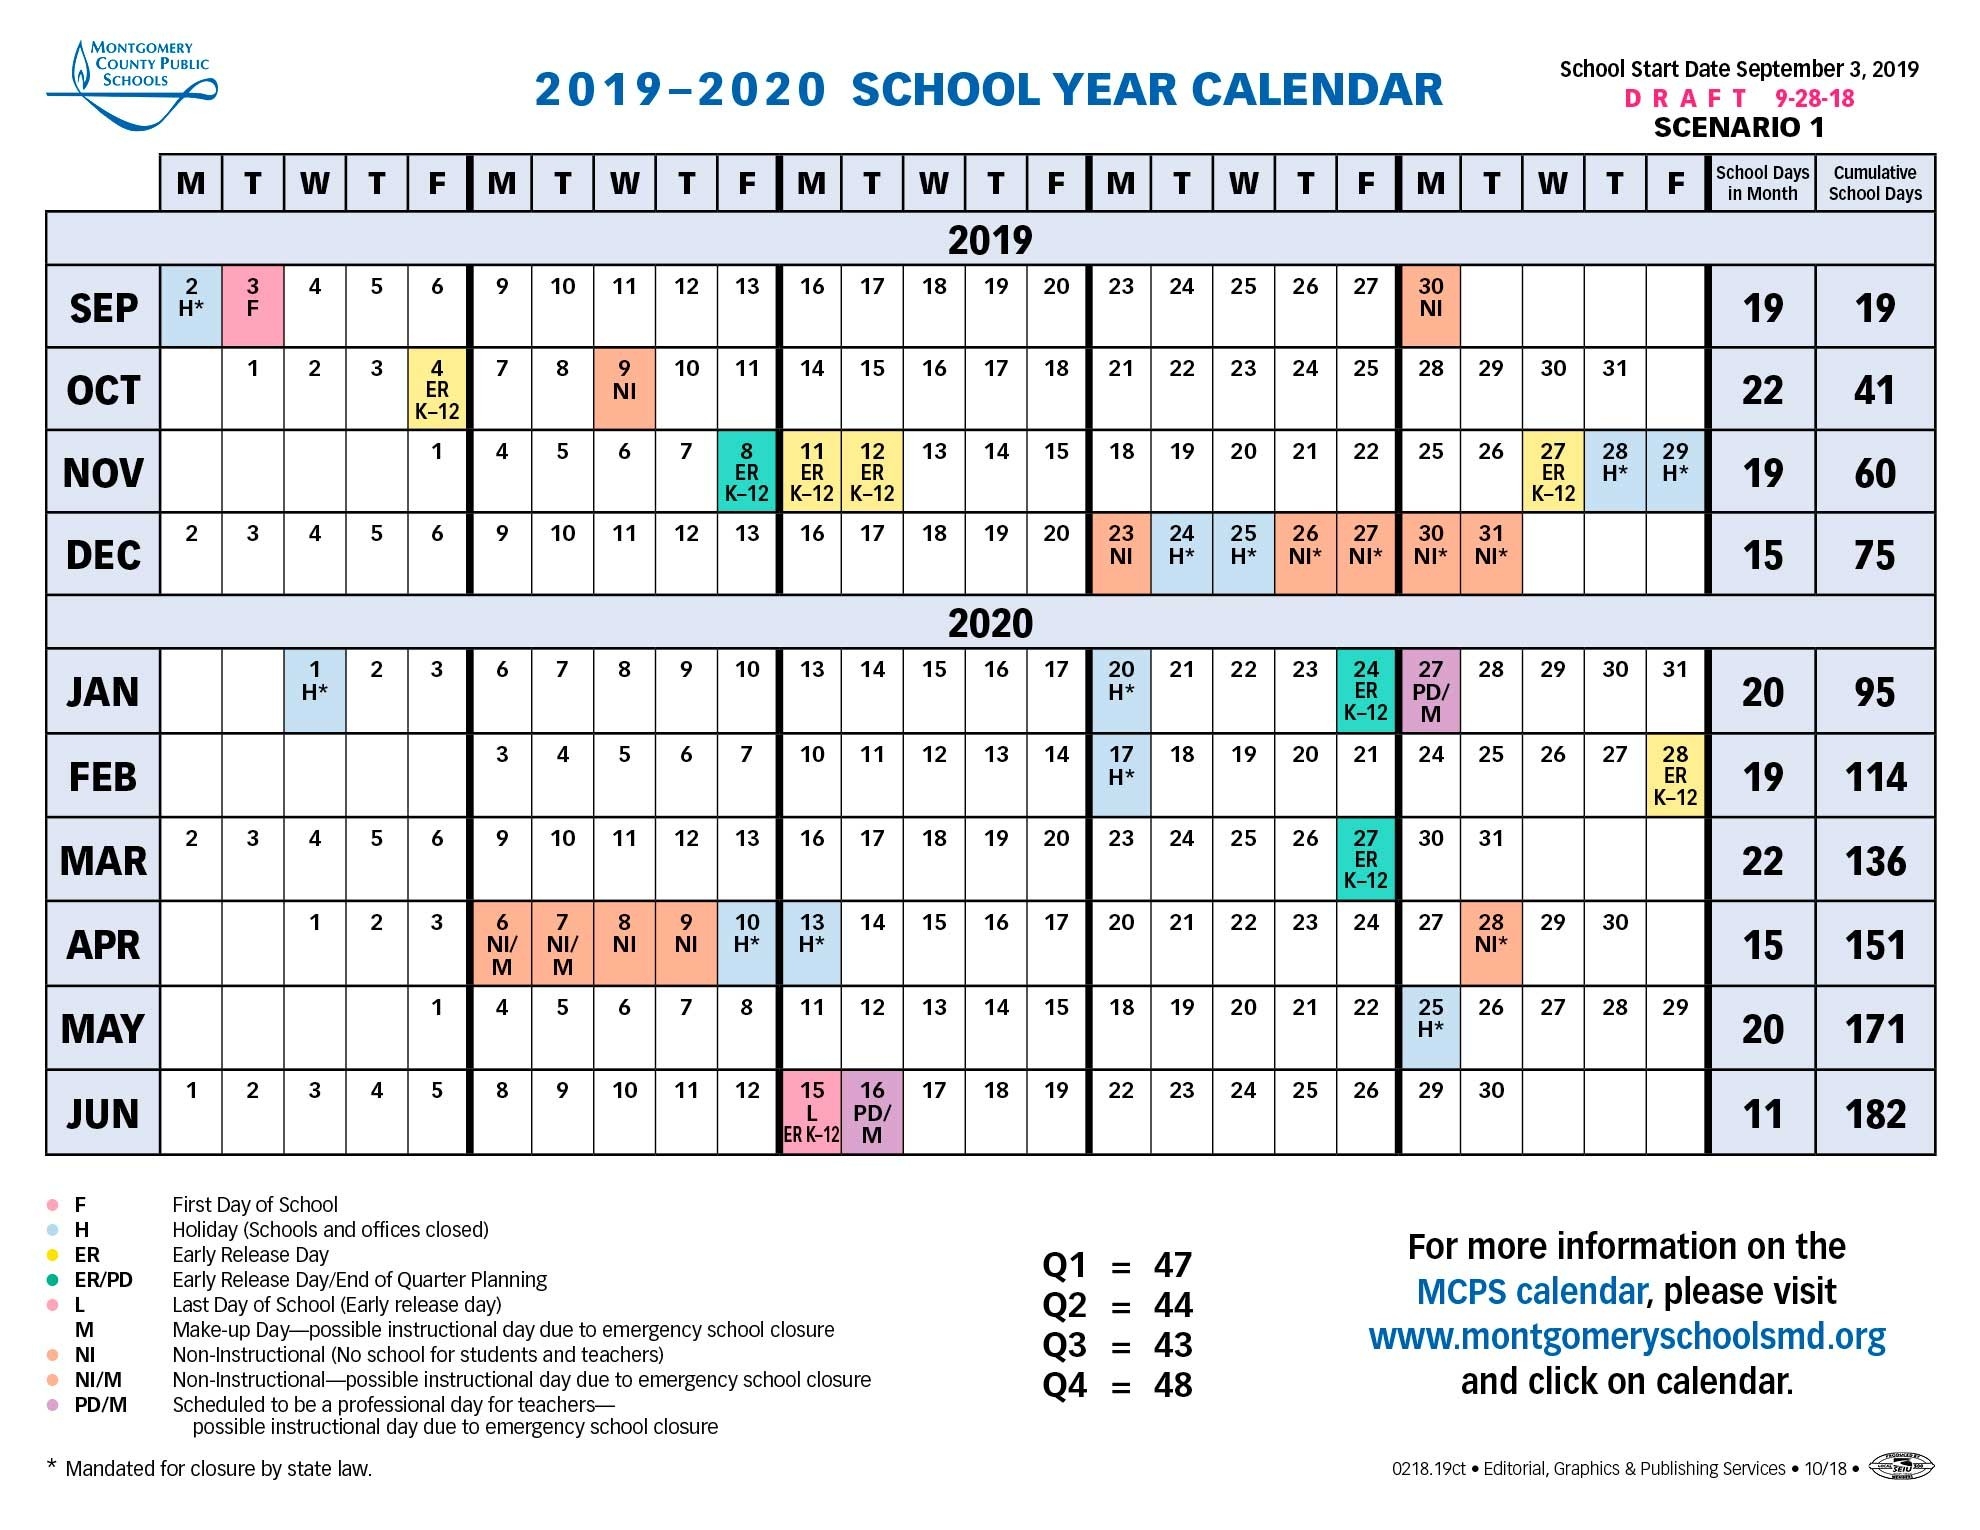 School Board Approves Longer Spring Break For 2019-2020-Jewish Holidays Calendar 2020